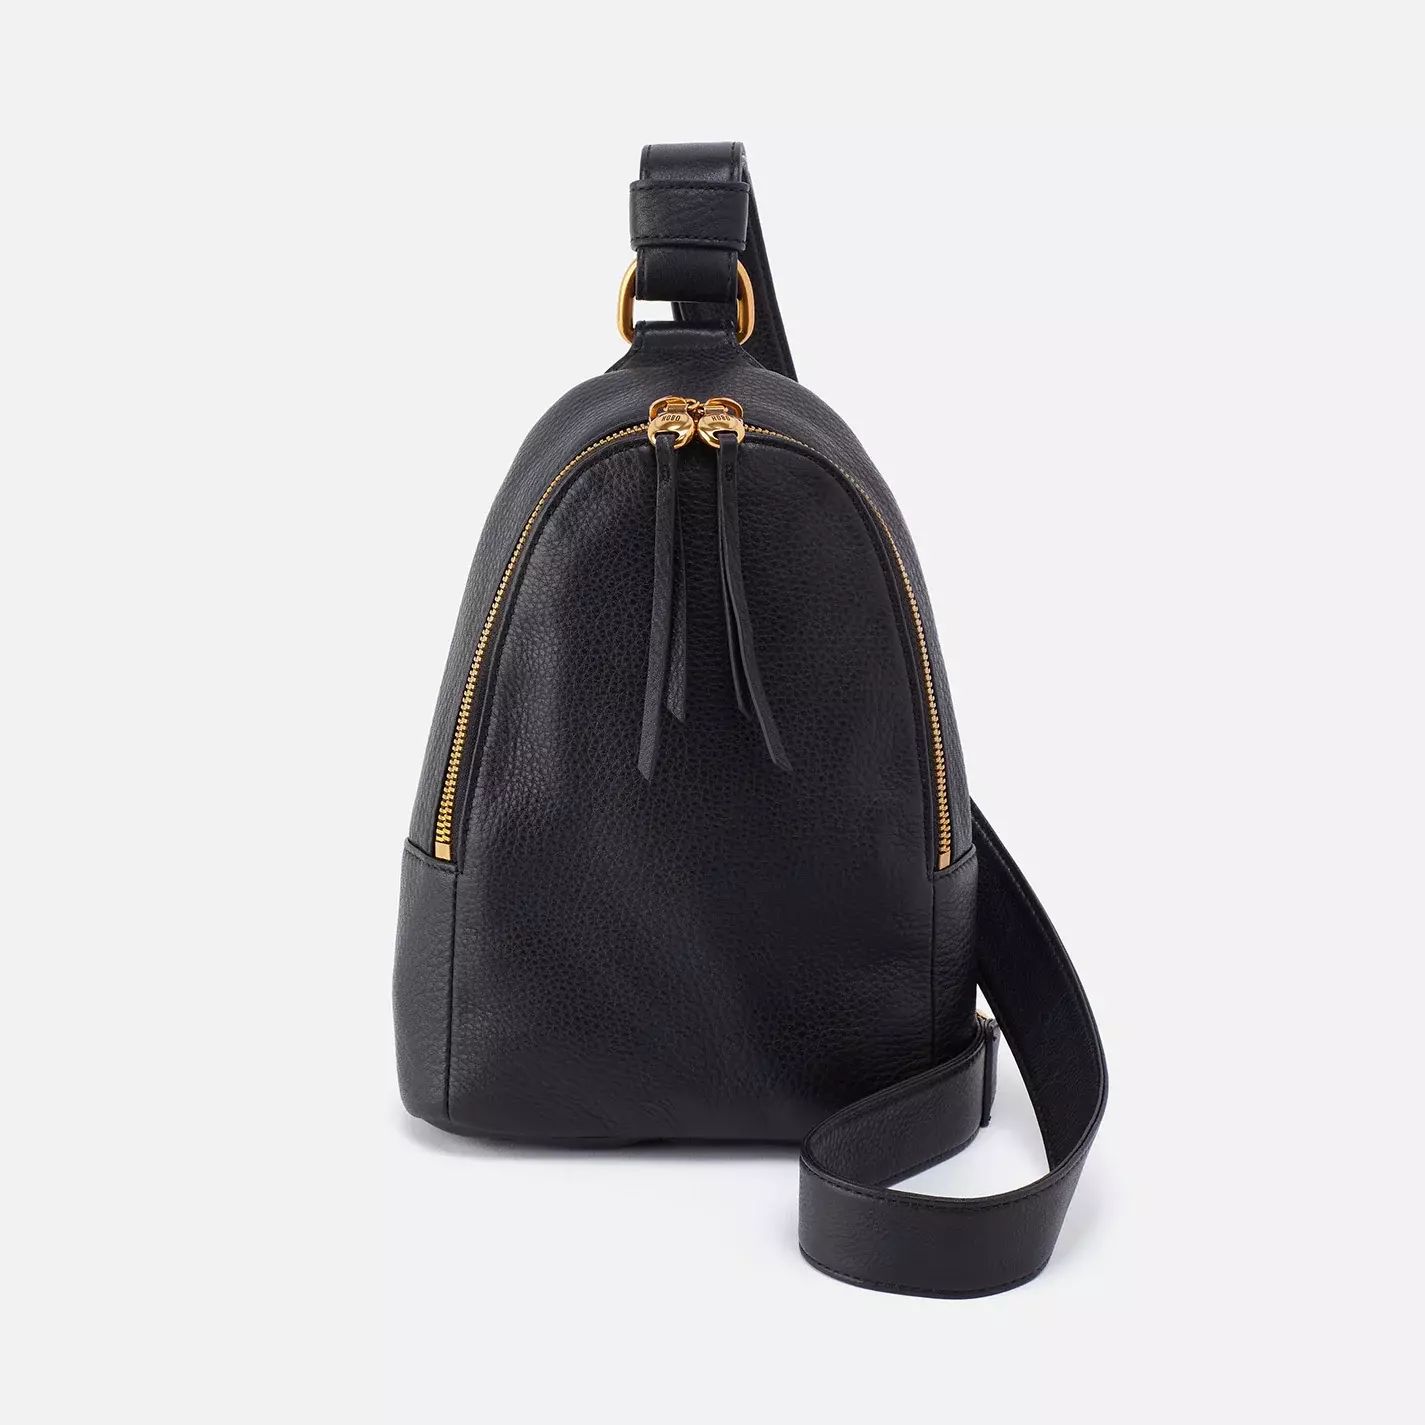 Fern Sling in Pebbled Leather - Black | HOBO Bags